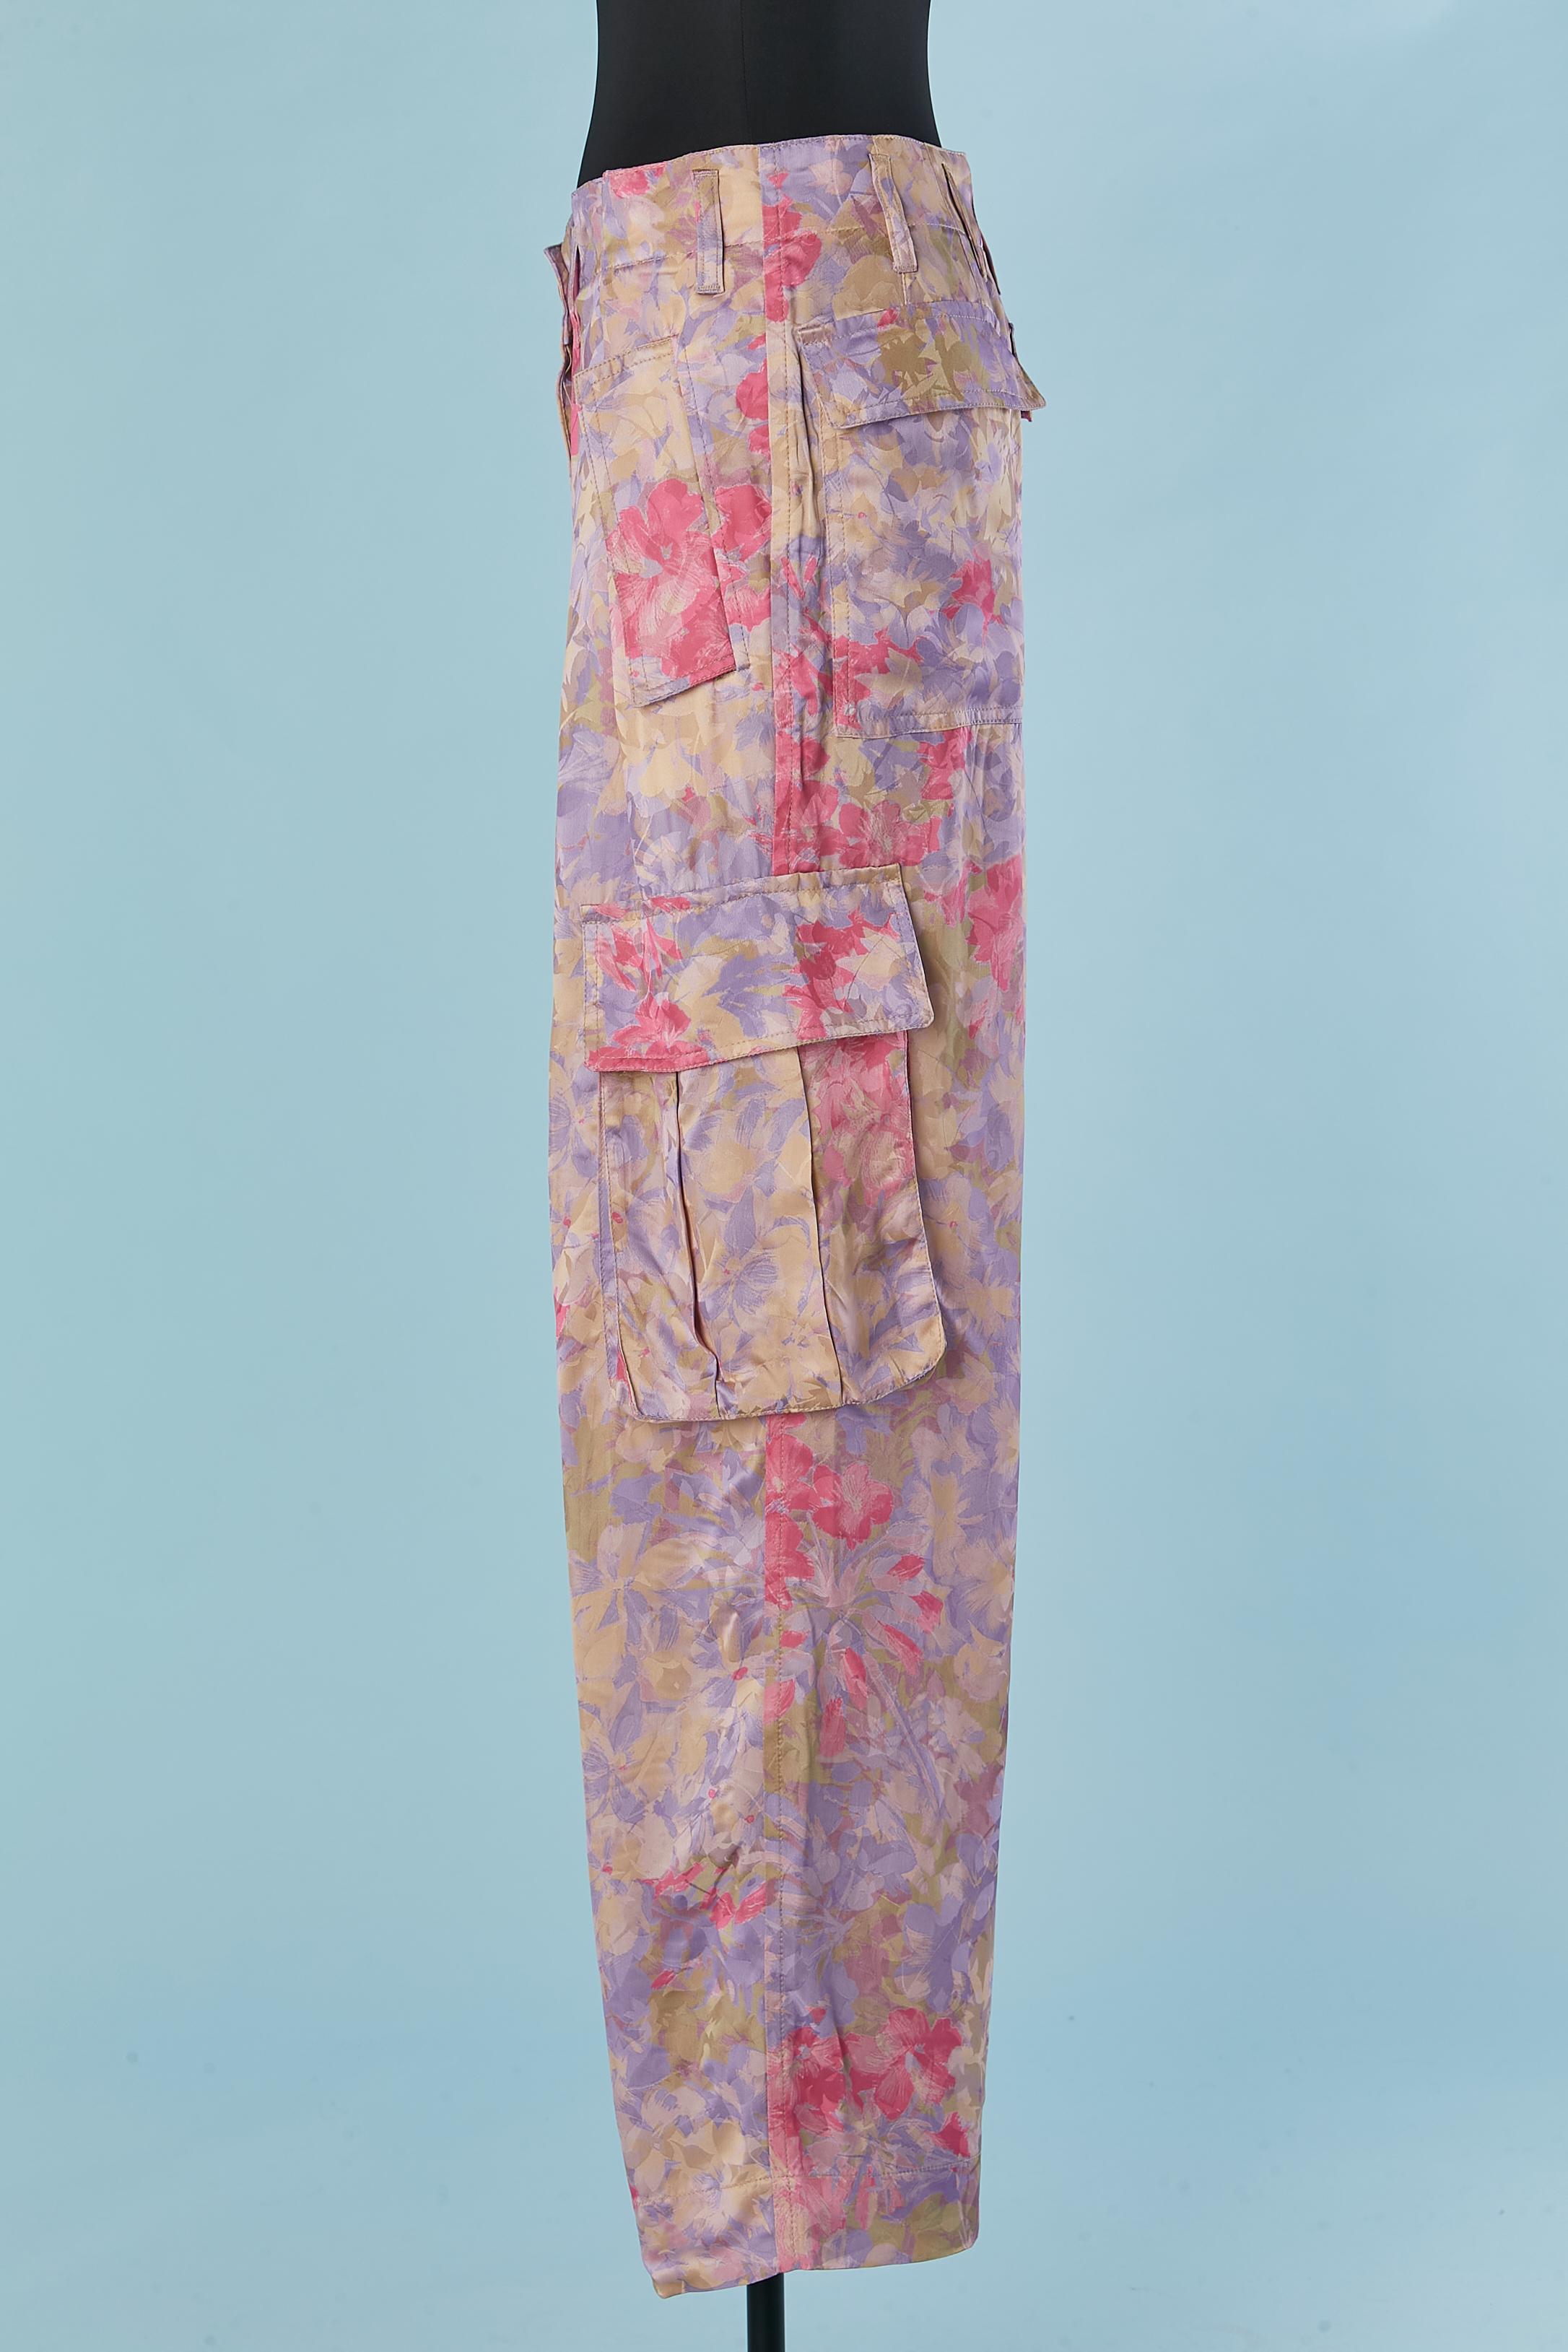 Trouser suit in flower jacquard pattern Dries Van Noten  For Sale 8